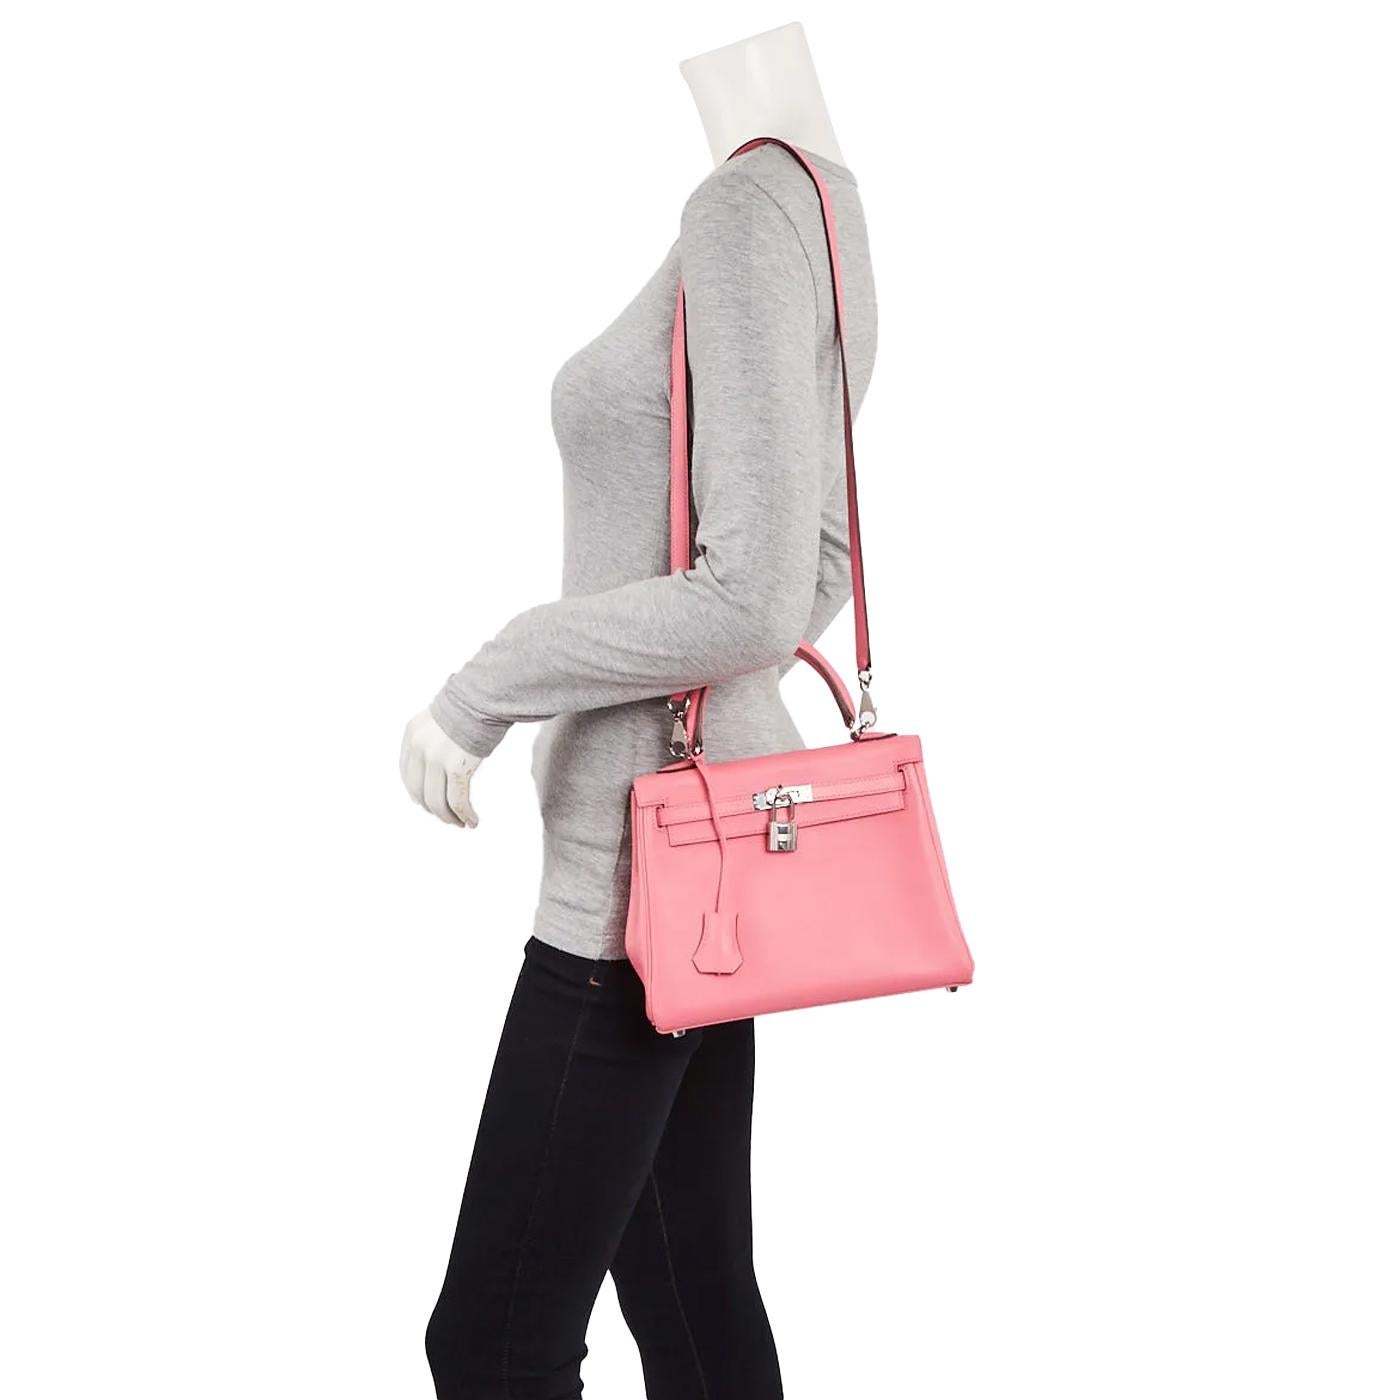 Hermes 25cm Bubblegum Pink Swift Leather Palladium Plated Kelly Retourne Bag For Sale 10